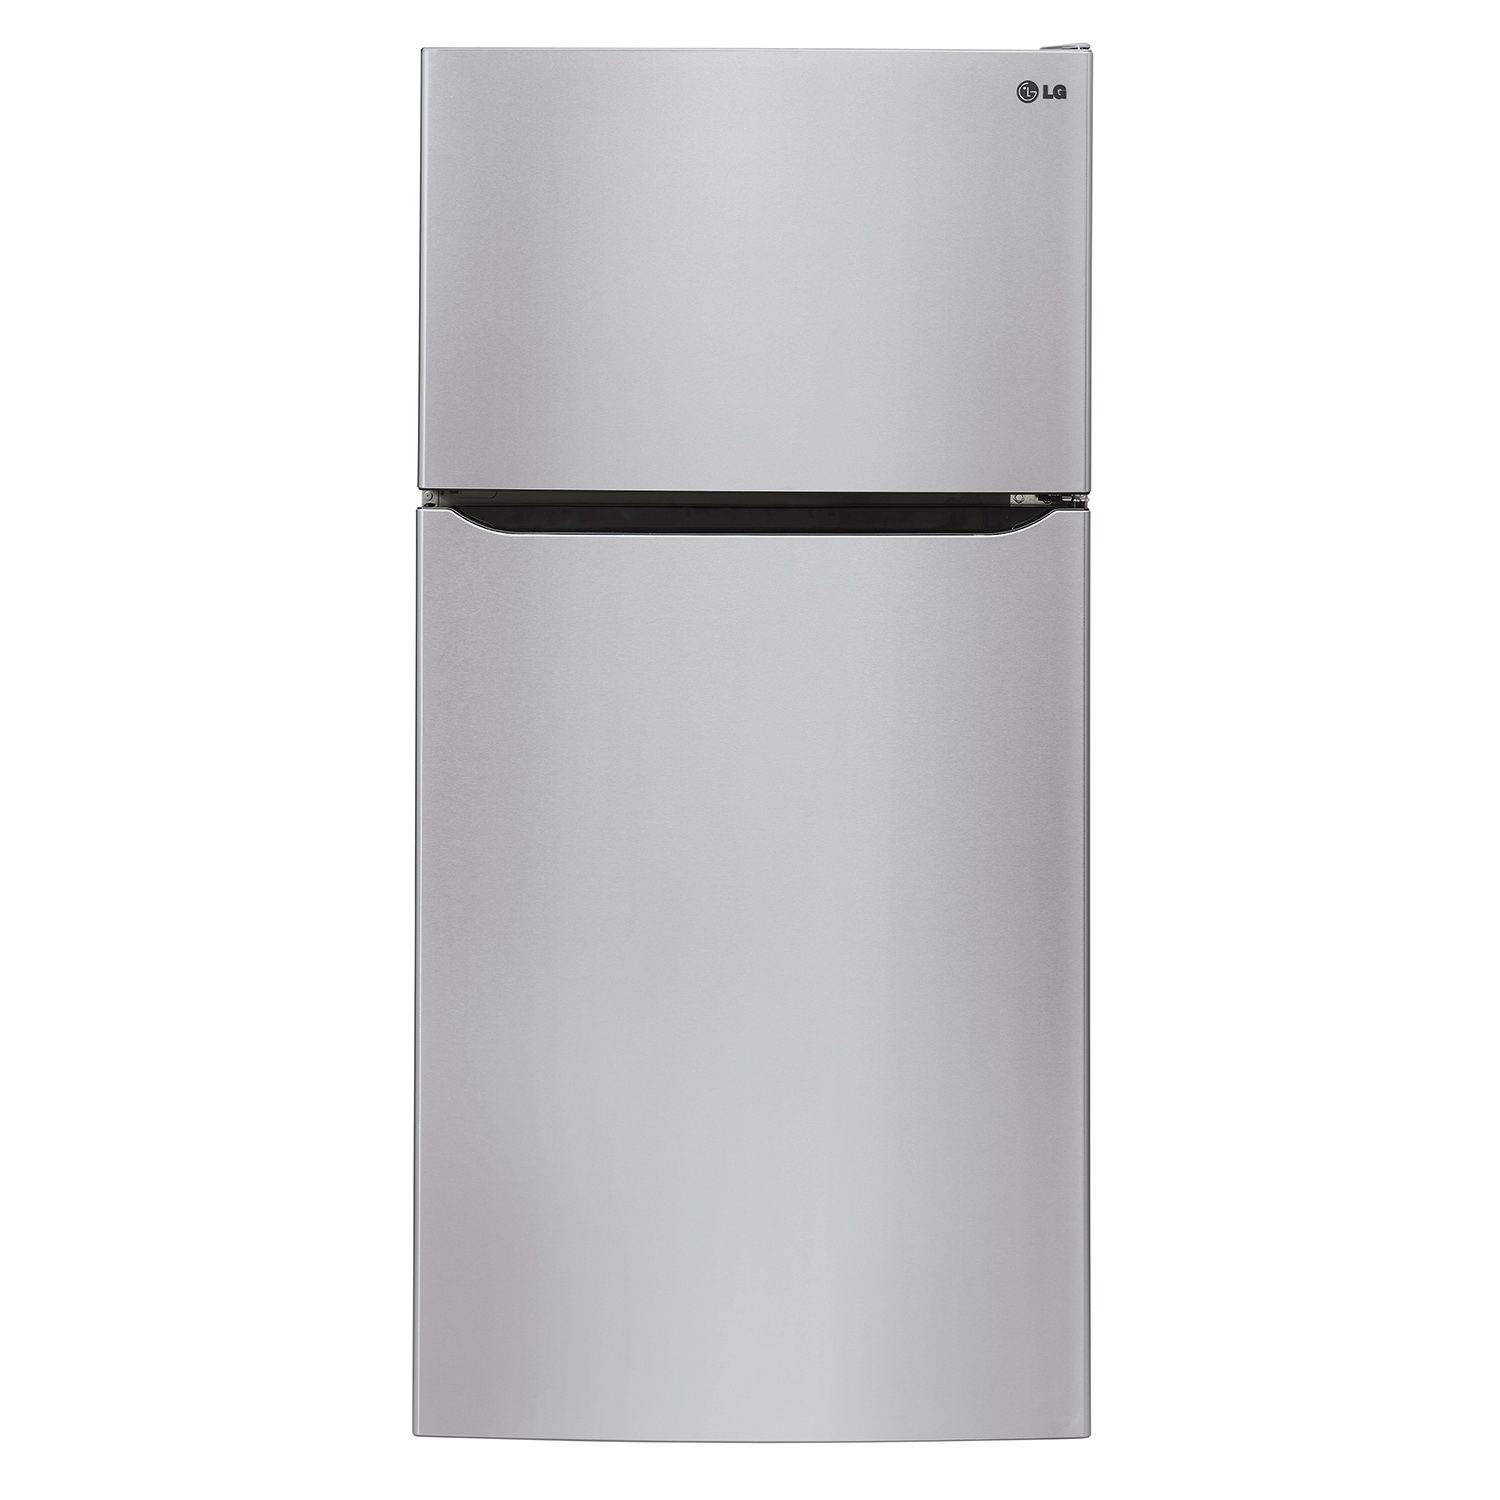 LG LTCS24223S 24 cu. ft. Large-Capacity 33” Wide Top-Mount Refrigerator